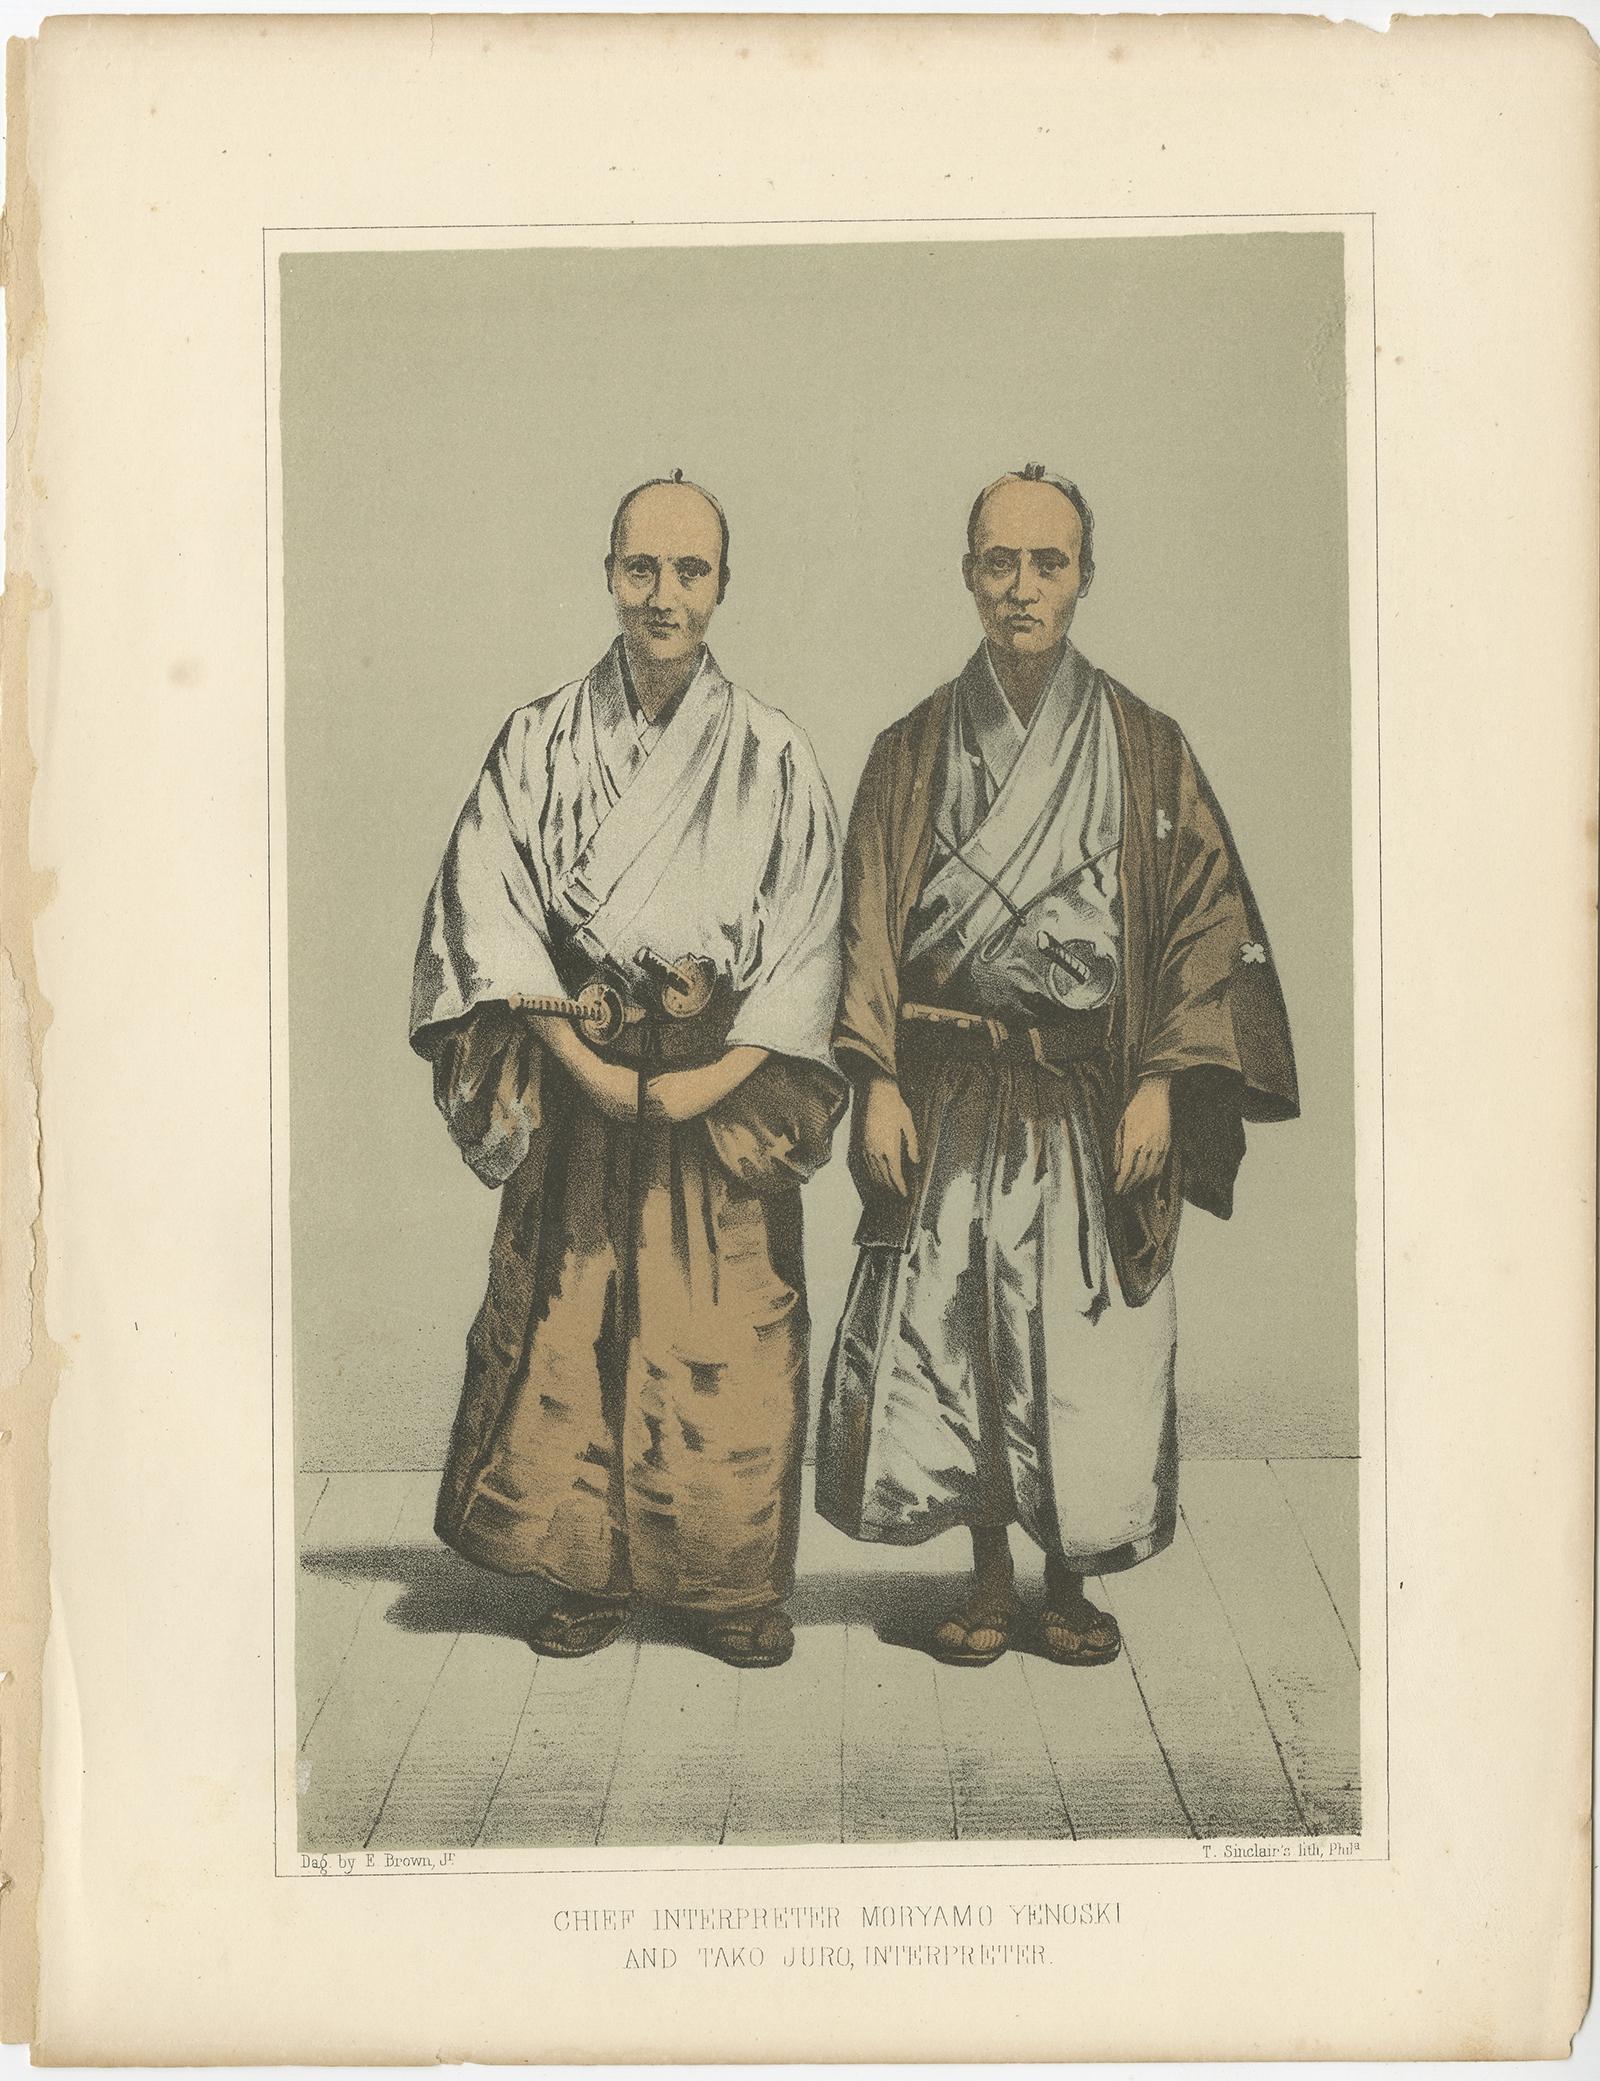 Description: Antique print titled 'Chief Interpreter Moryamo Yenoski and Tako Juro, Interpreter‘. 

Portrait of two Japanese men, Moryamo Yenoski and Tako Juro, full-length portrait, standing facing front, as interpreters for members of the Perry